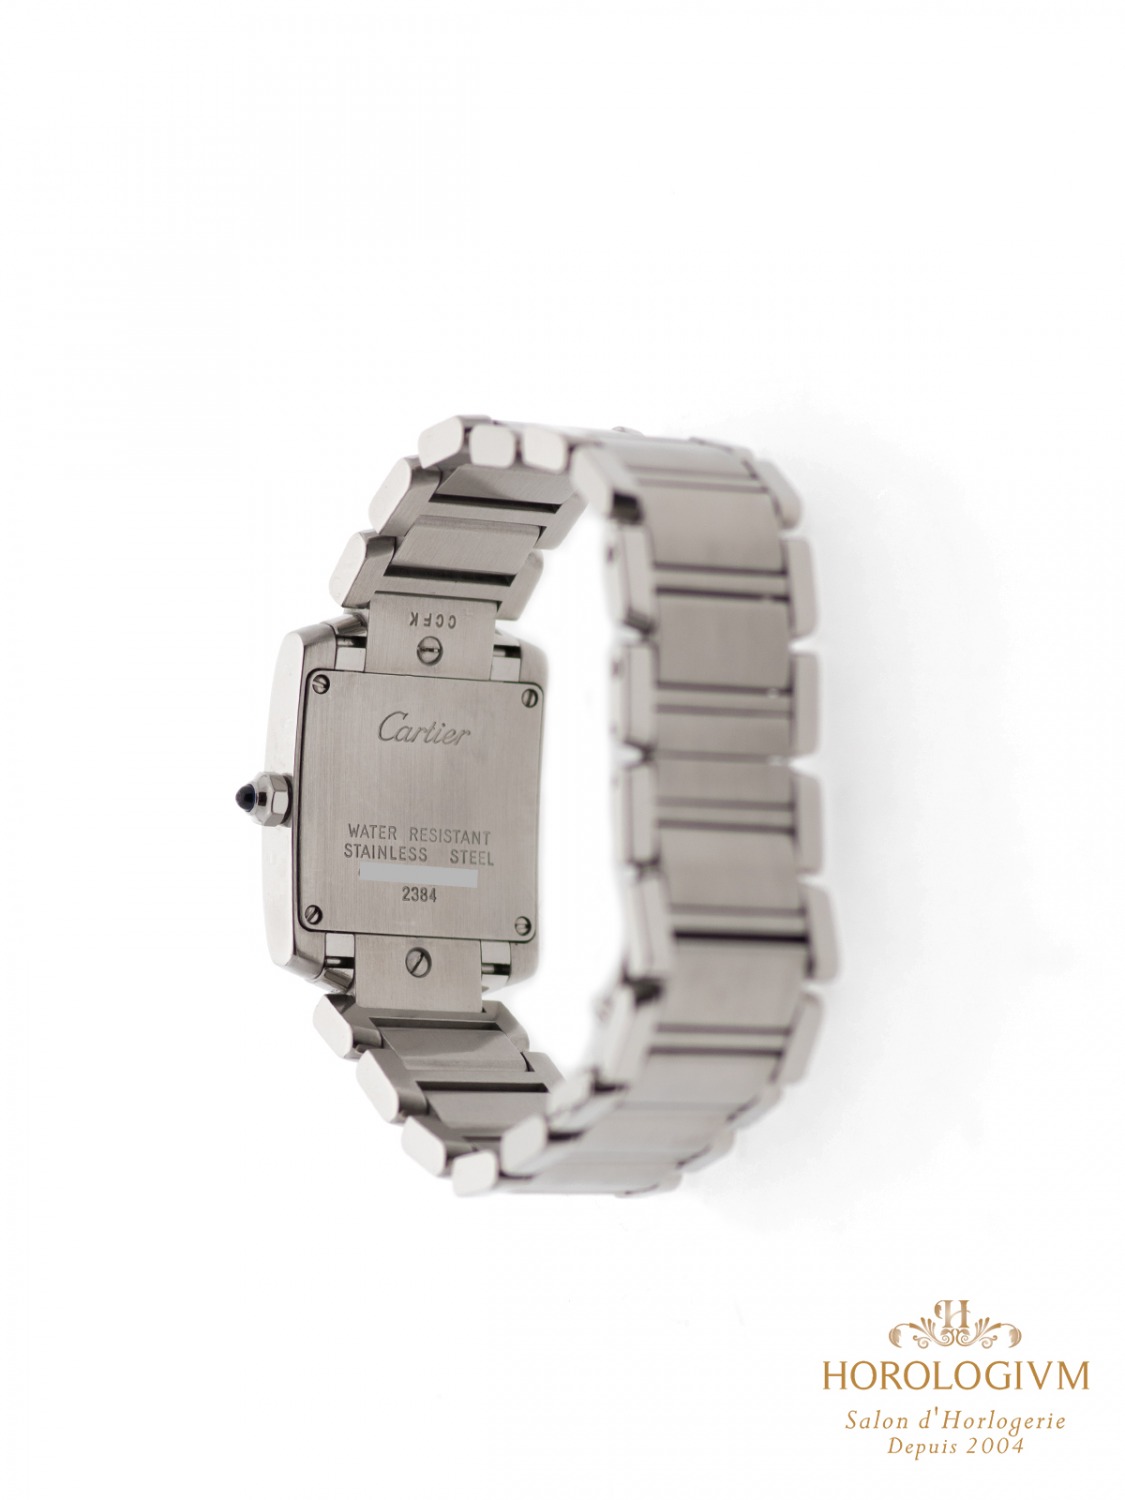 Cartier Tank Française Ref. 2384 Small Size watch, silver